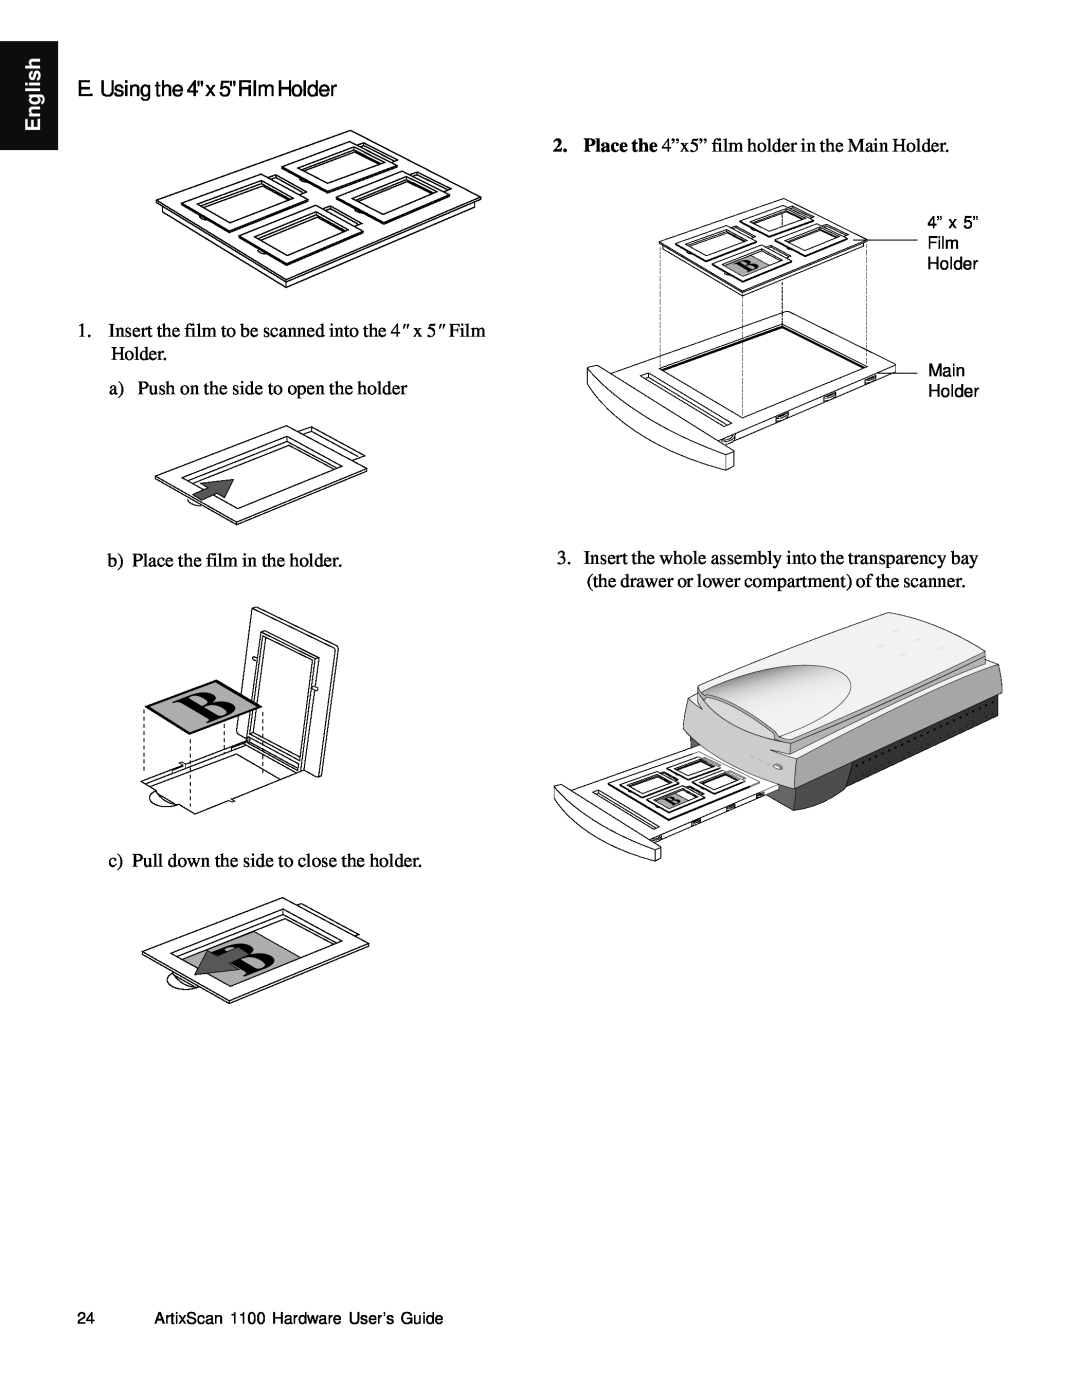 Microtek Artix Scan1100 manual E. Using the 4 x 5 Film Holder, English, 4” x 5” Film Holder Main Holder 